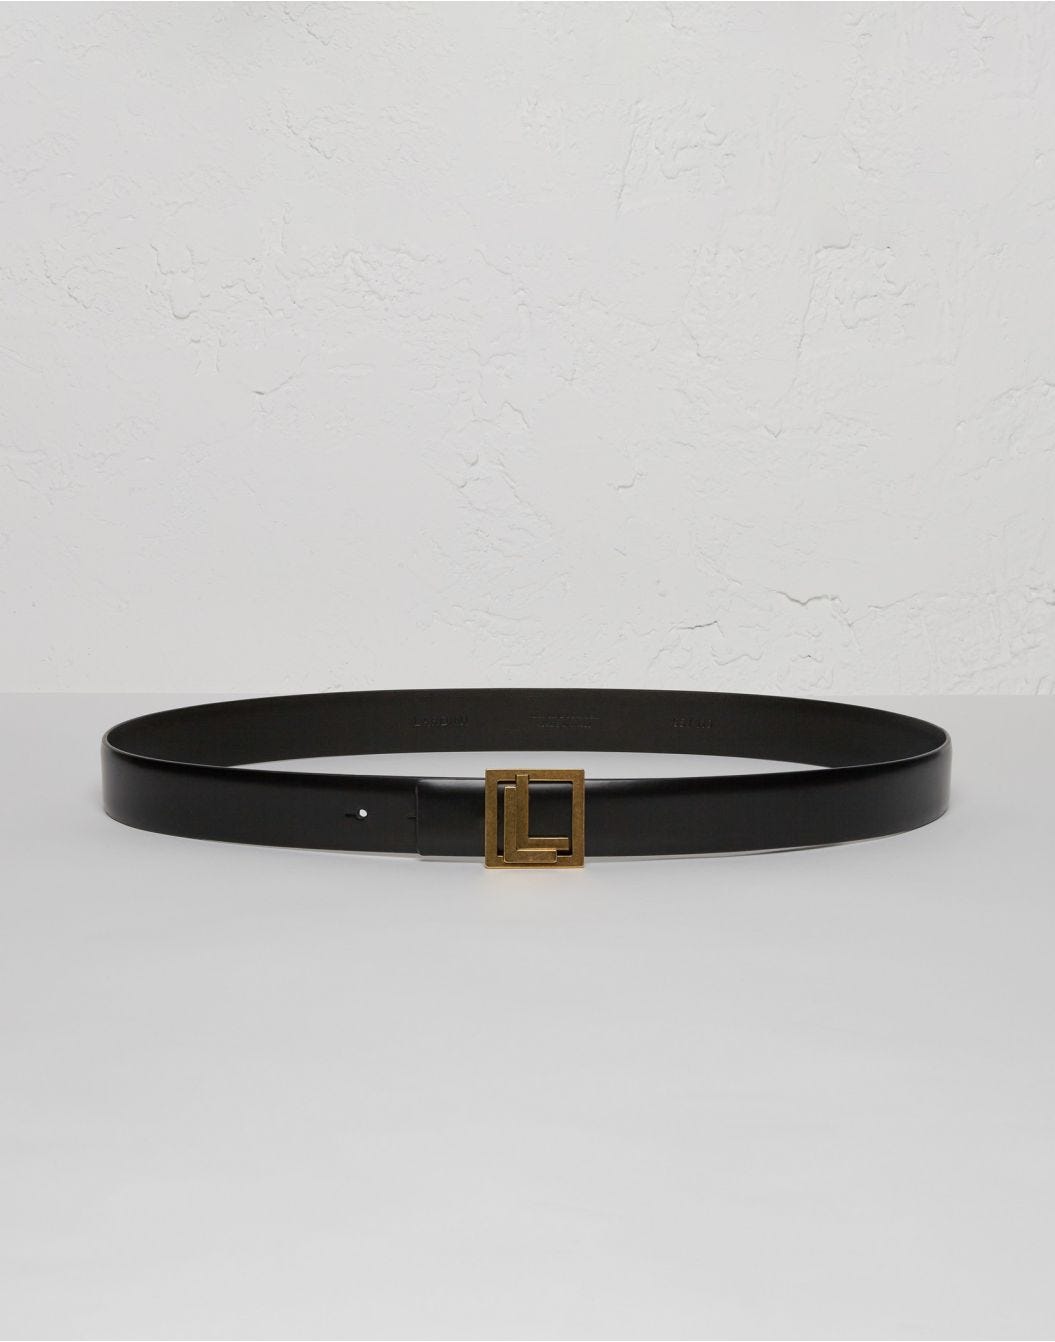 Black suede calfskin belt